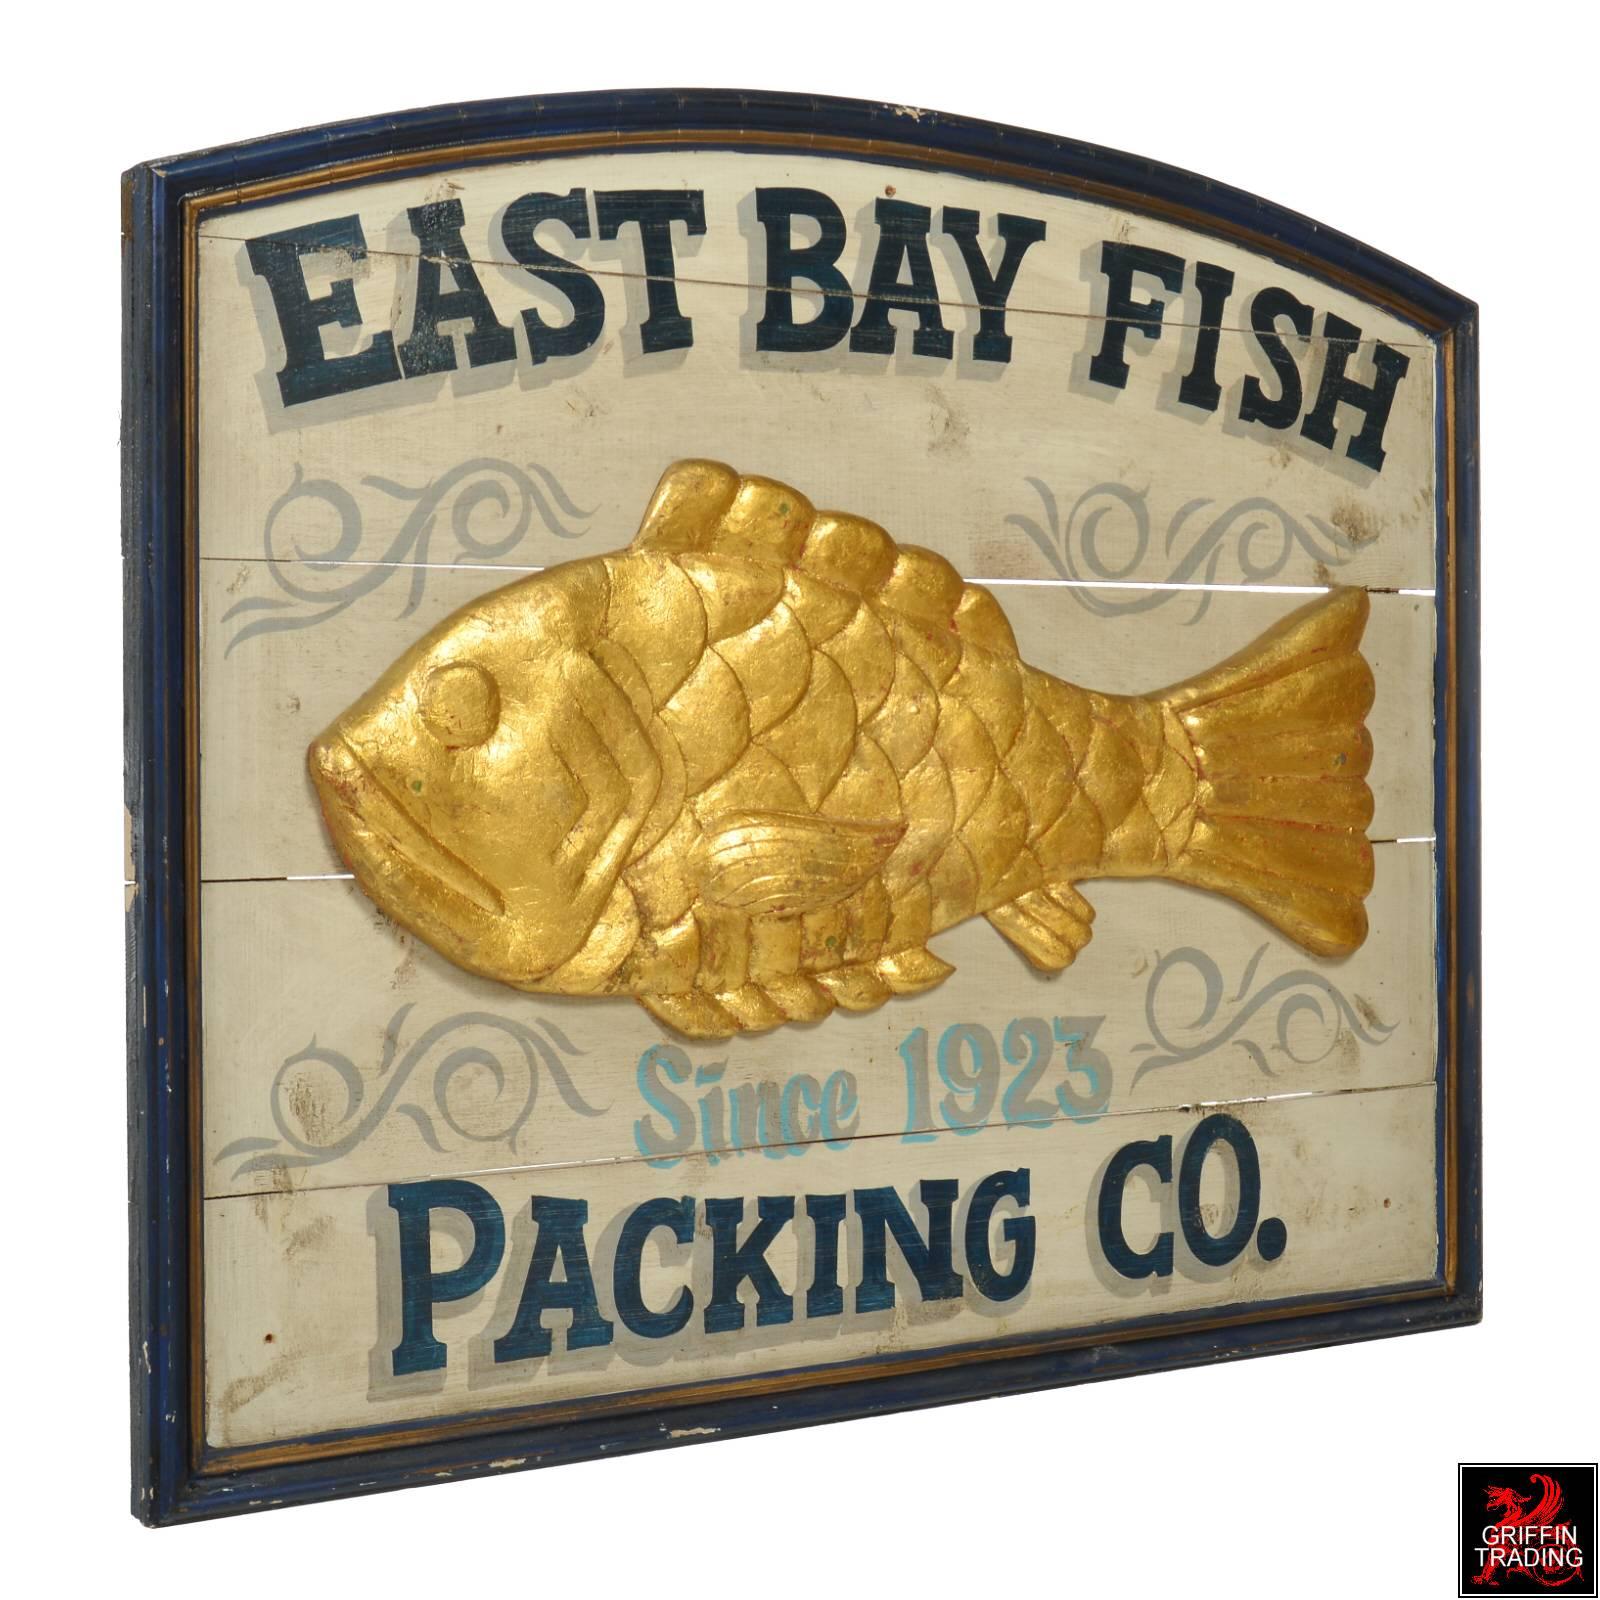 east bay fish company